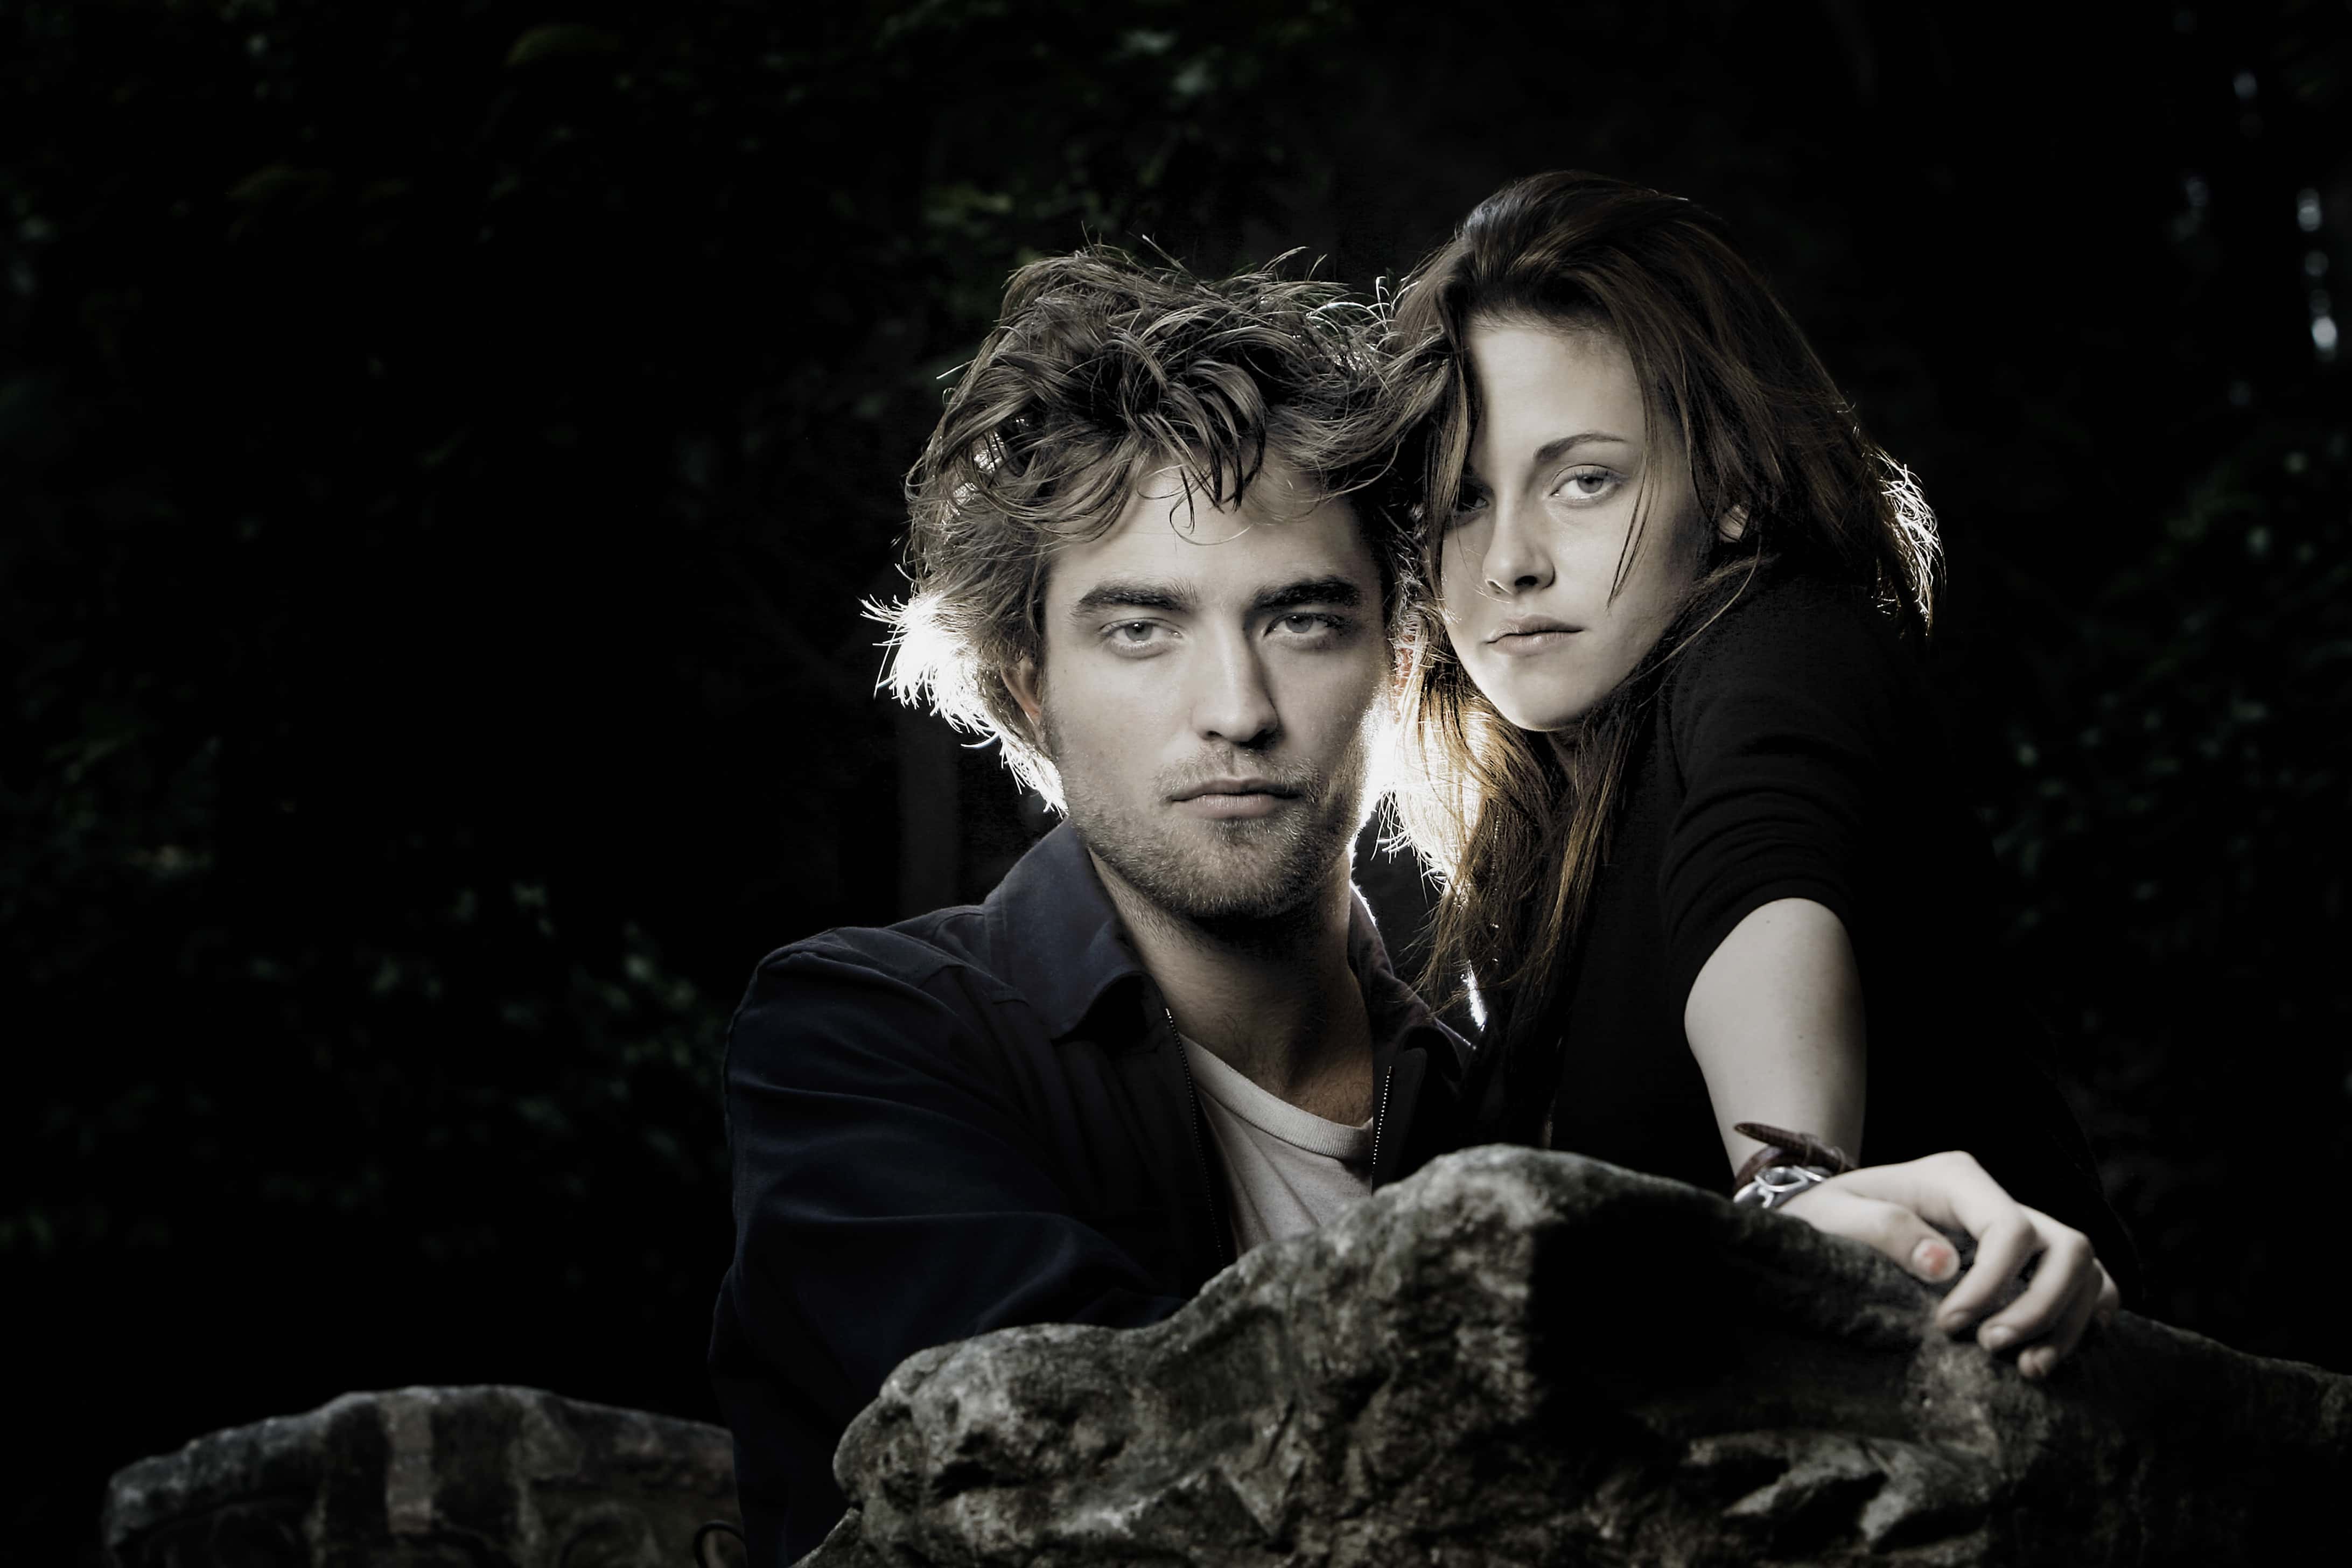 Rome Film Festival 2008: 'Twilight' - Cast Portraits. Robert Pattinson and Kristen Stewart.